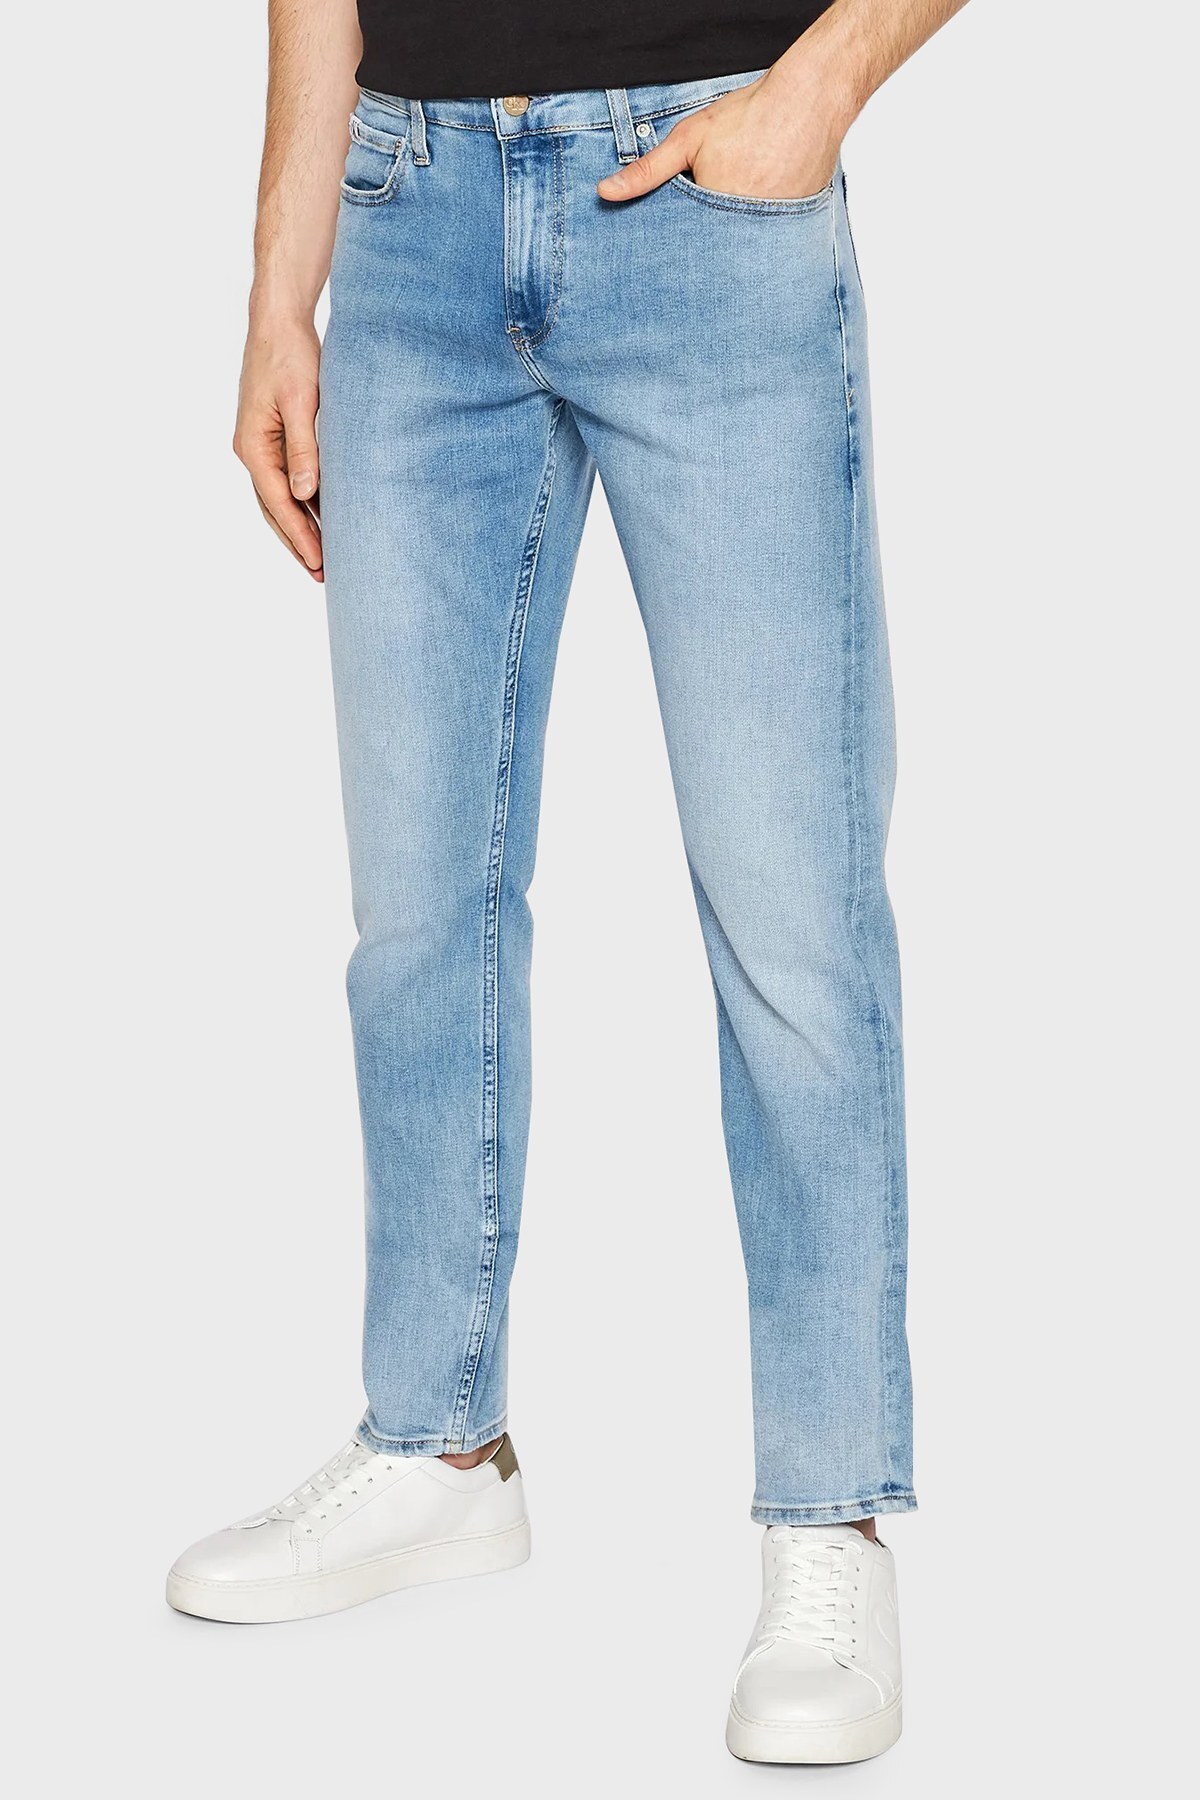 Calvin Klein Pamuklu Slim Fit Düşük Bel Düz Paça Jeans Erkek Kot Pantolon J30J320470 1AA Buz Mavisi